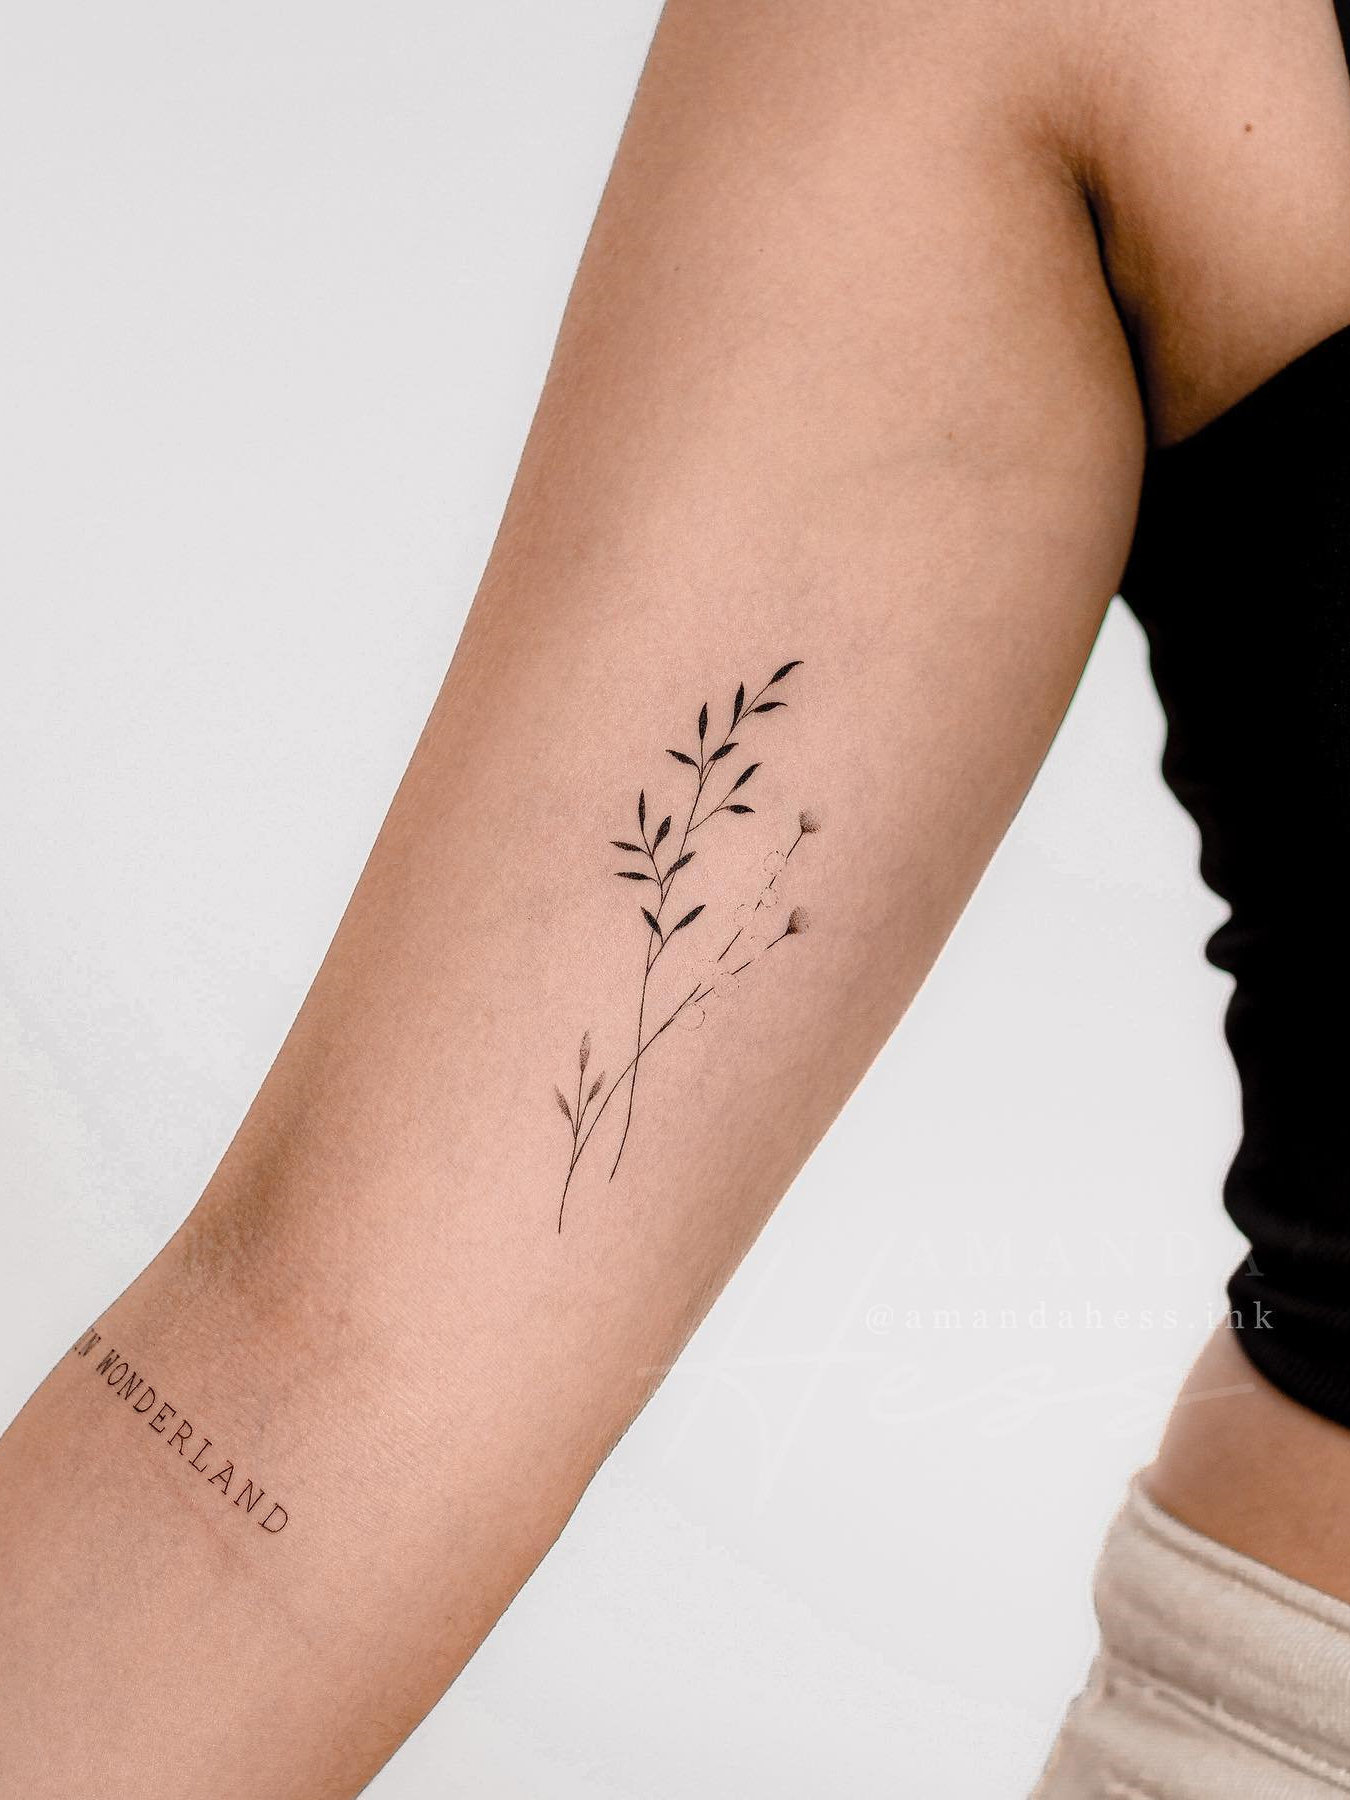 Inner Arm Tattoos for Females, small tattoos for women